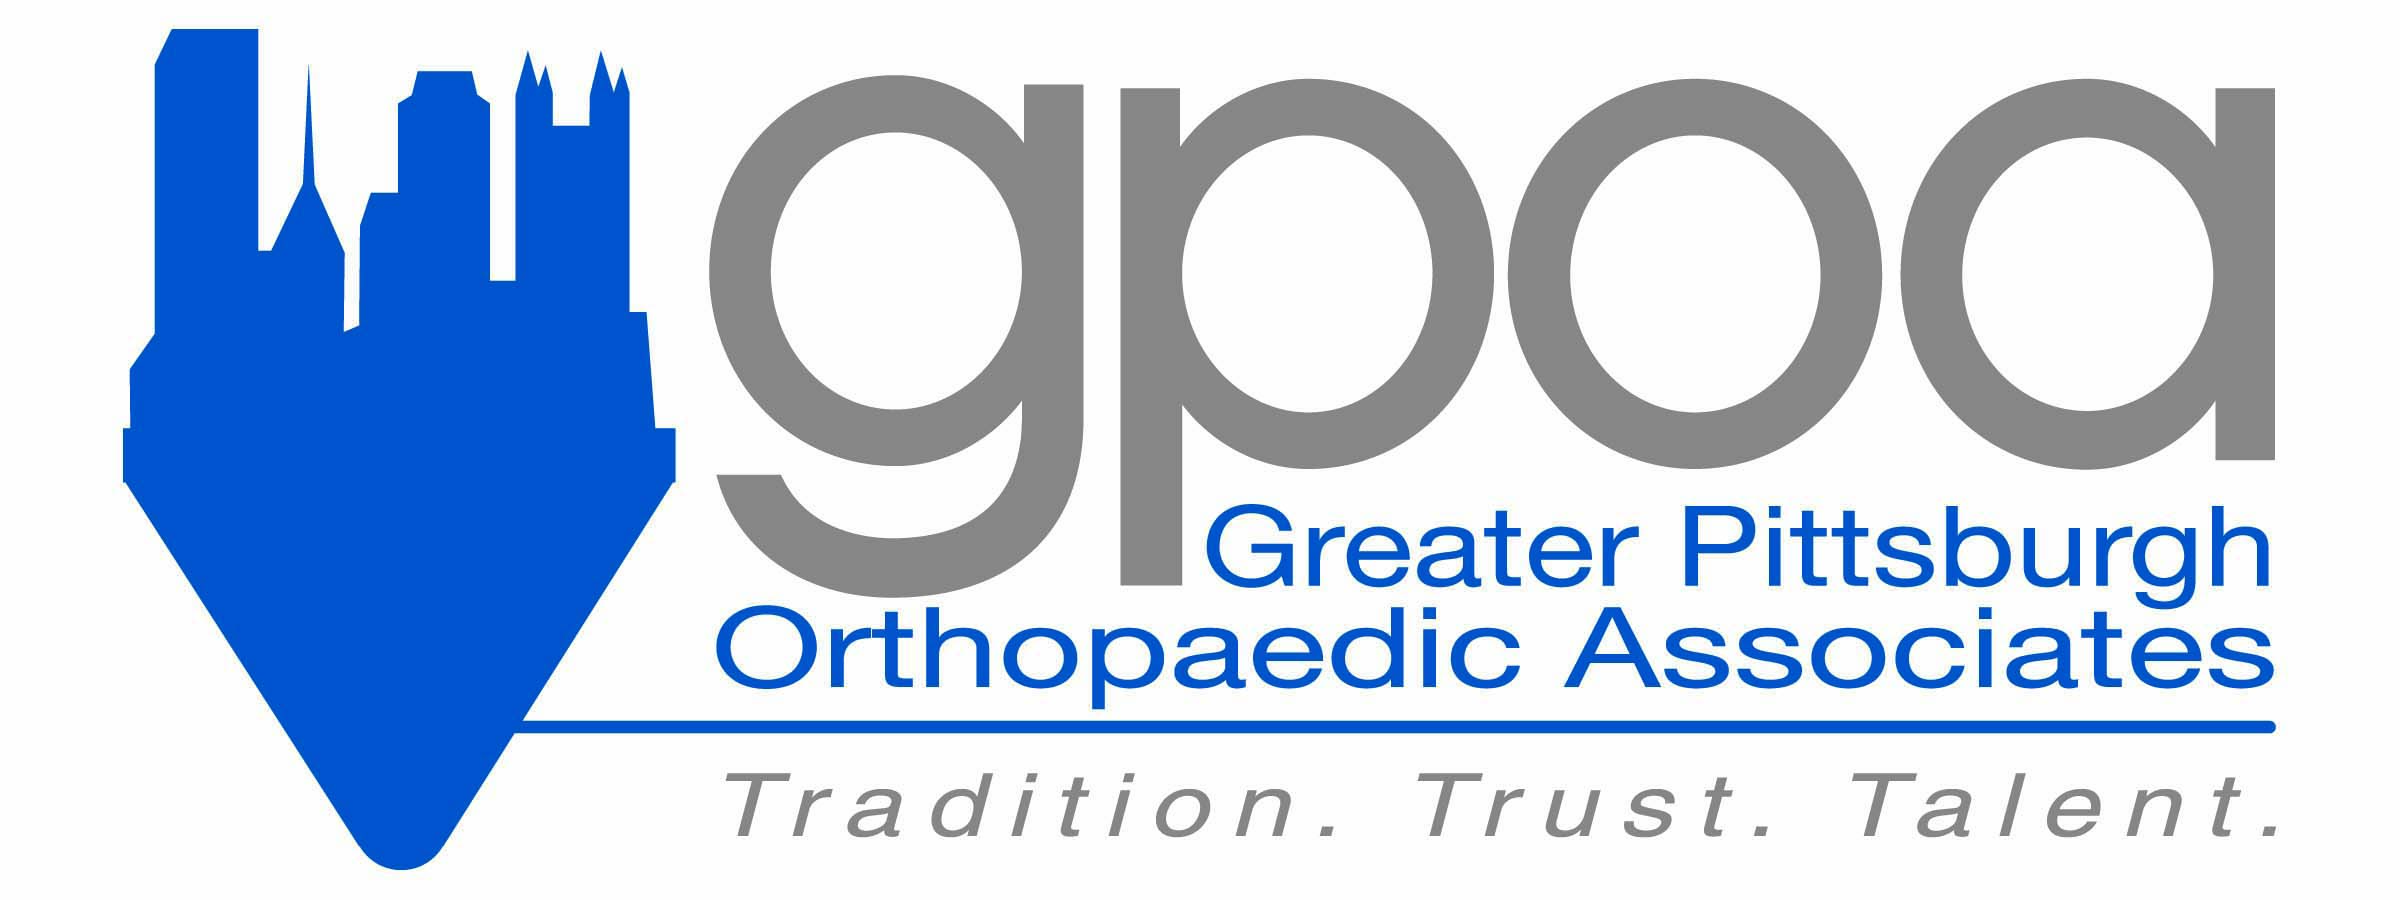 008.1 Greater Pittsburgh Orthopaedic Associates